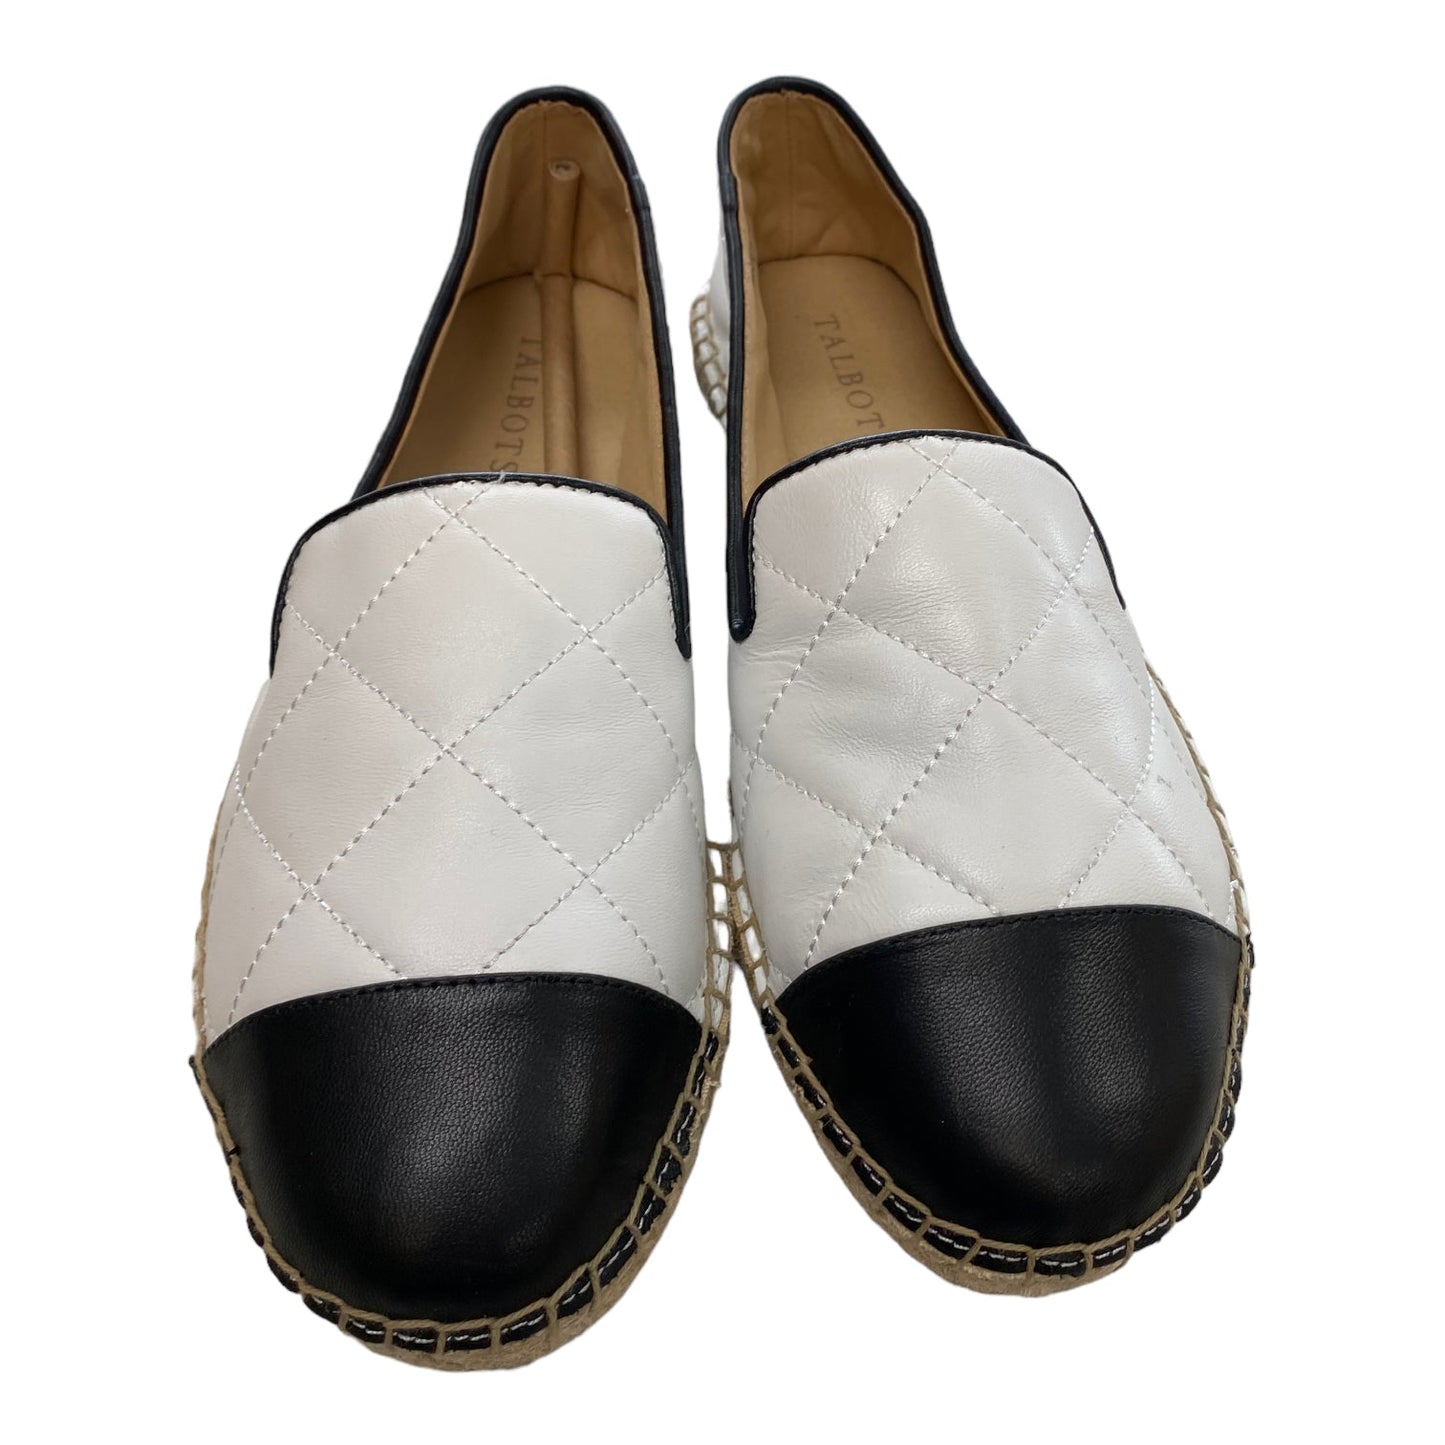 Black & White Shoes Flats Talbots, Size 8